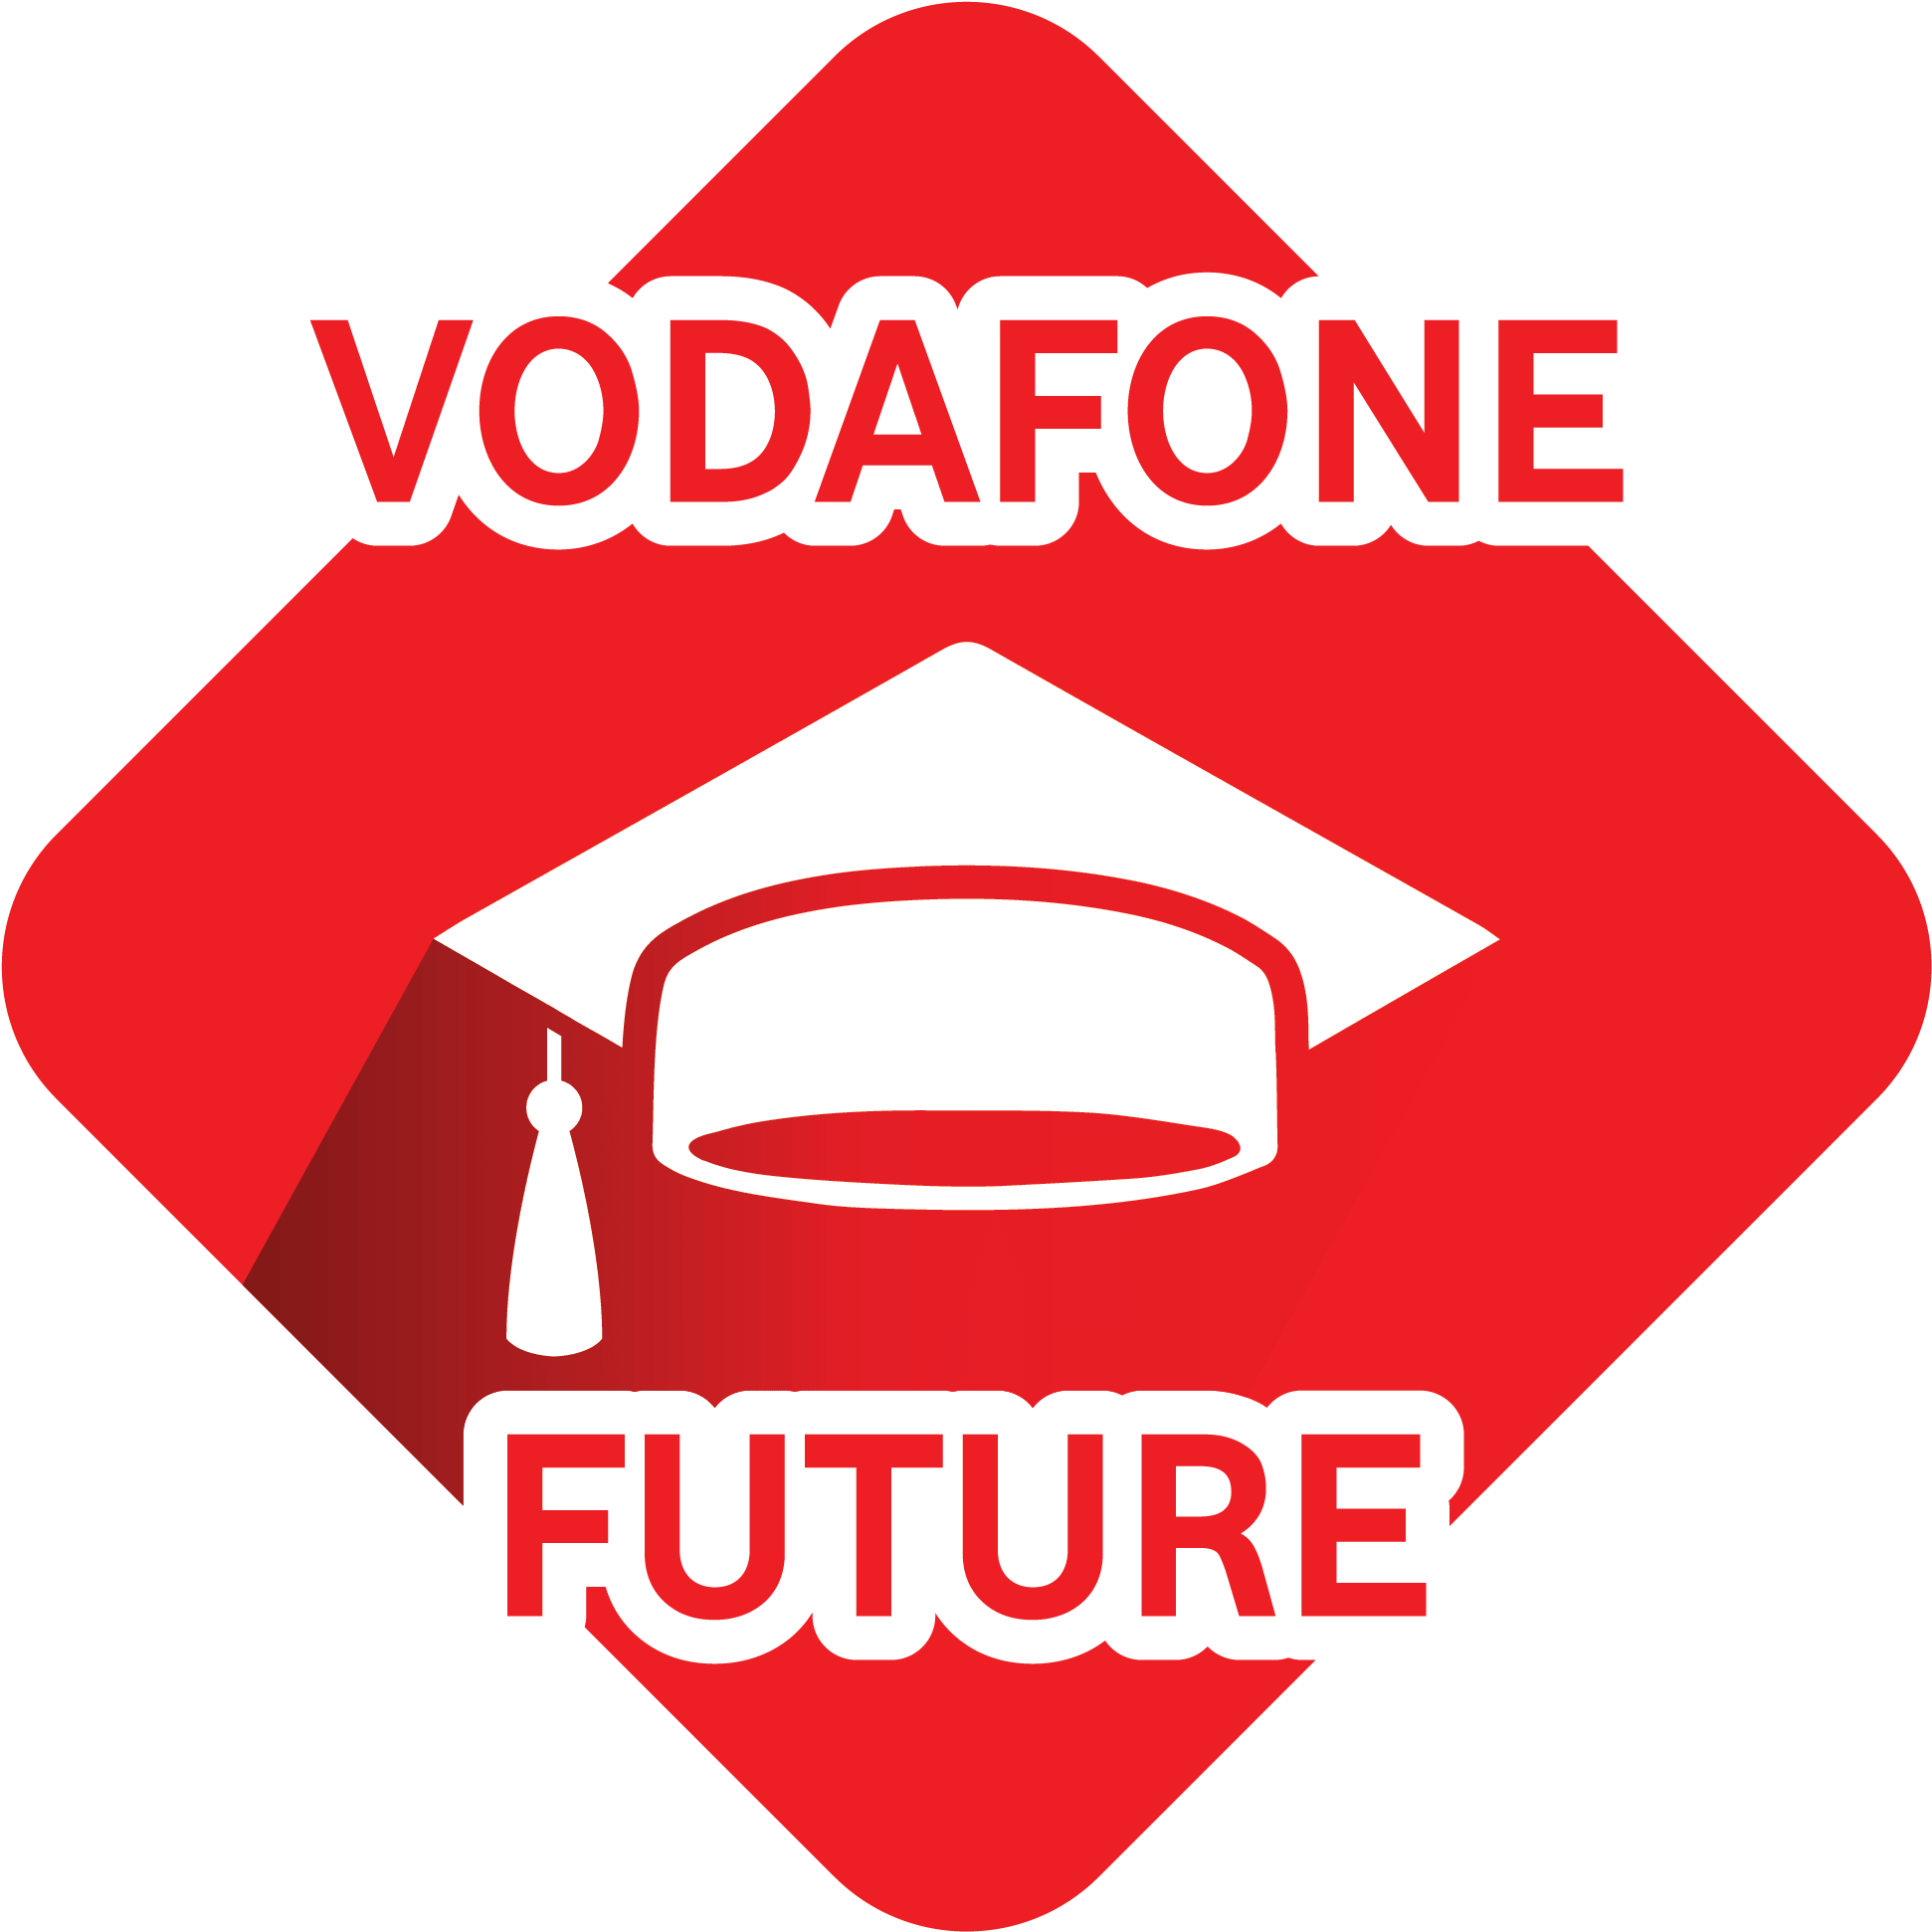 Vodafone Future Graduation Cap Logo